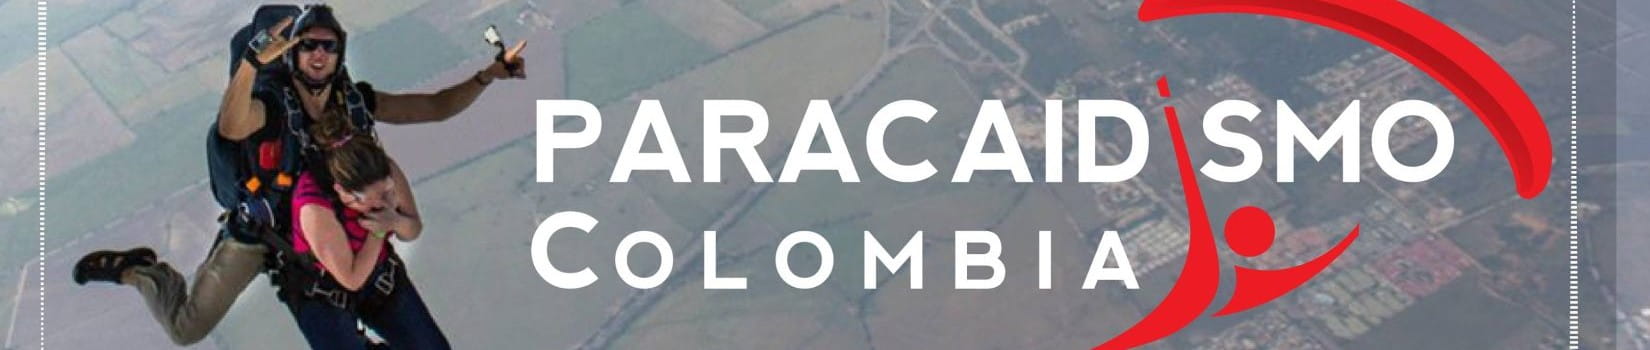 Paracaidismo Colombia